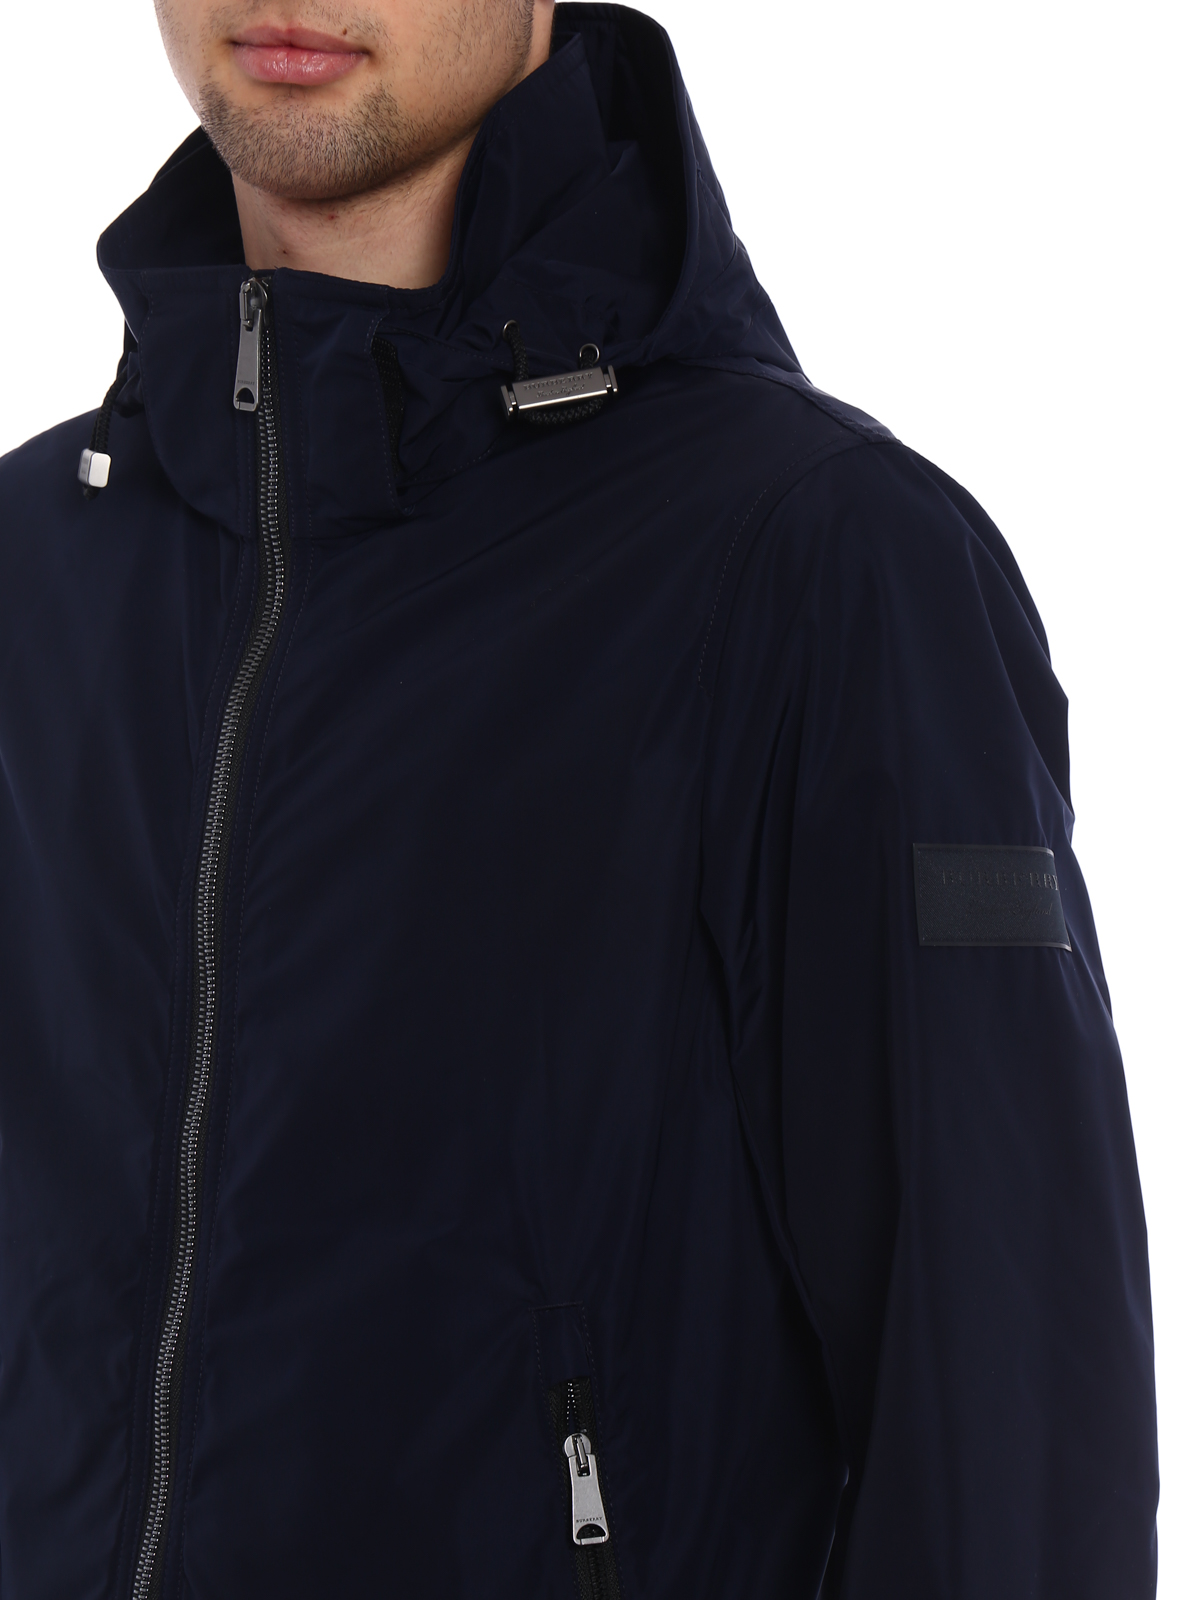 Burberry - Hedley nylon hooded jacket 